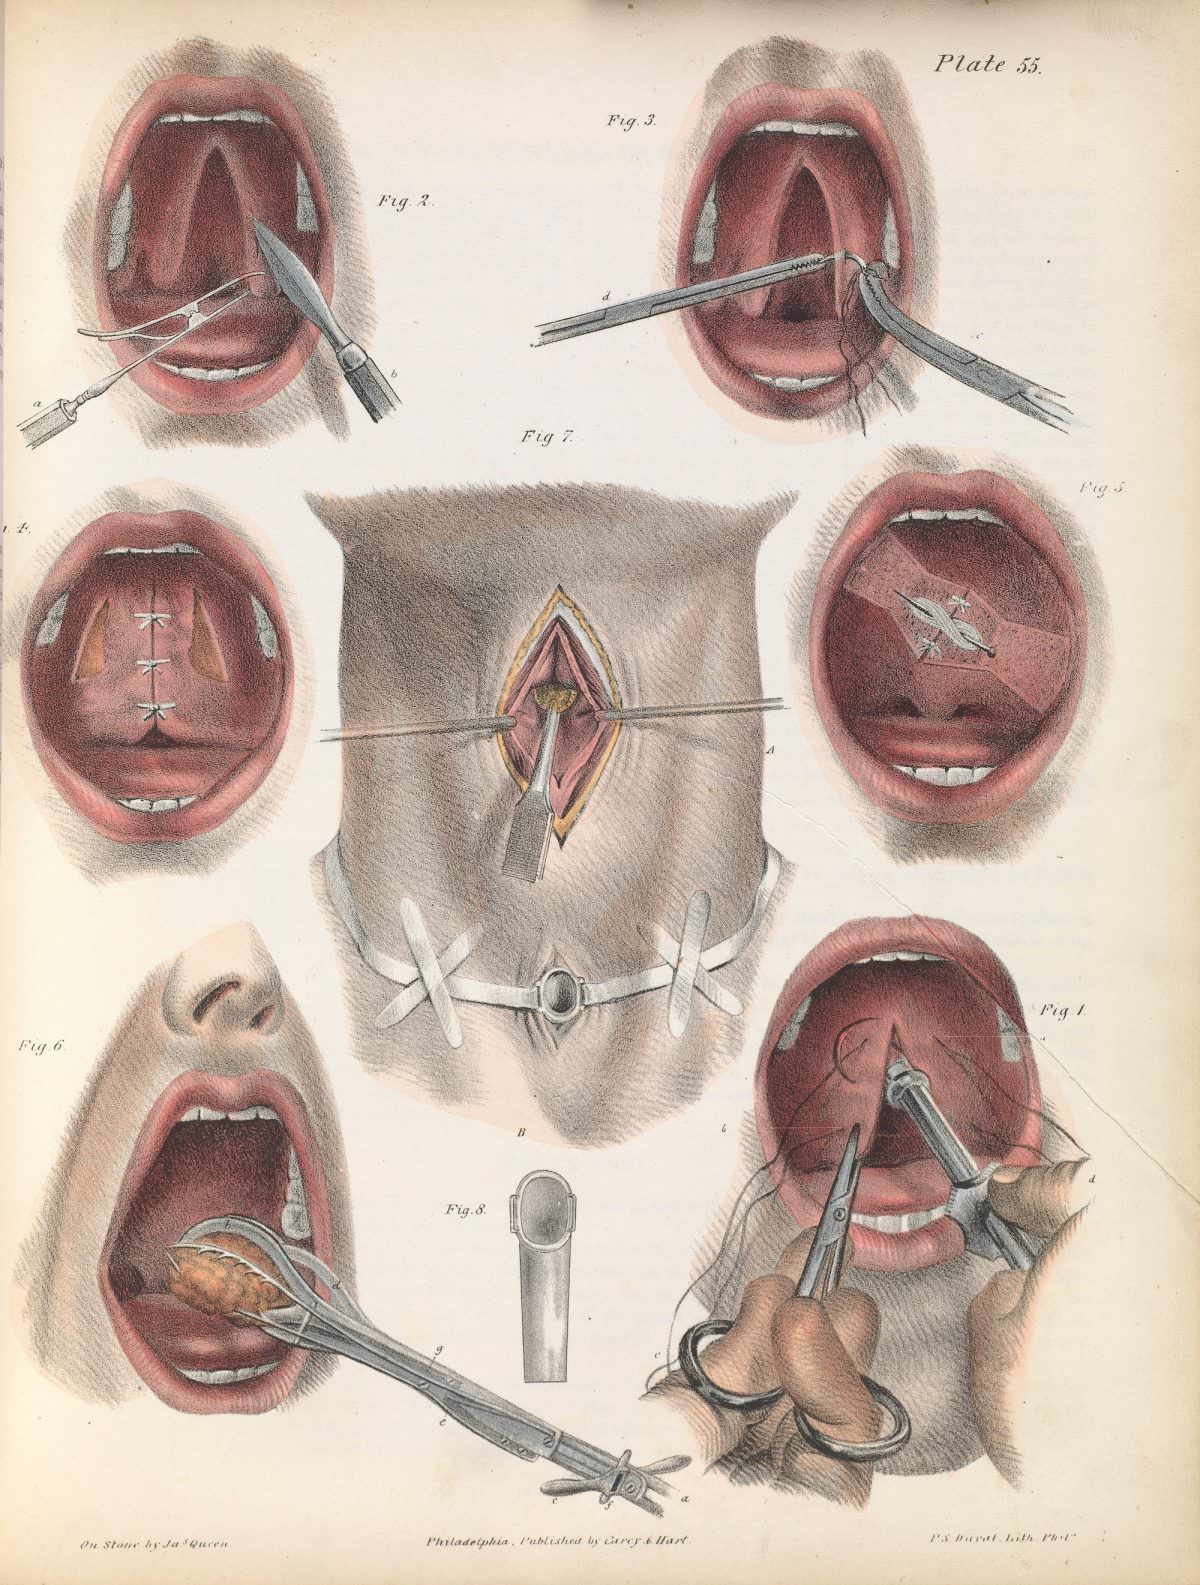 Plate 55, J. Pancoast, A treatise on operative surgery, 1846.